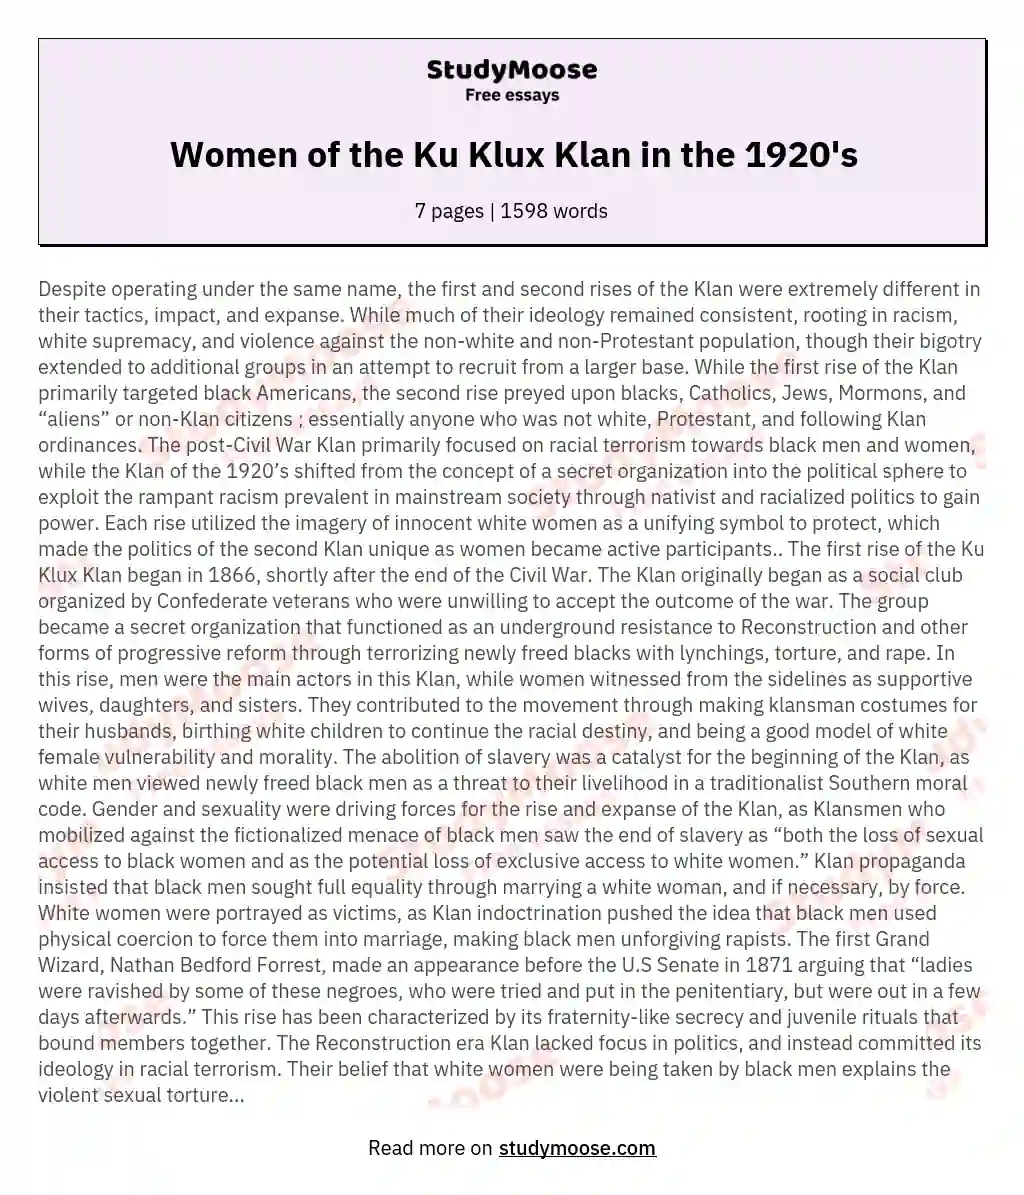 Women of the Ku Klux Klan in the 1920's essay